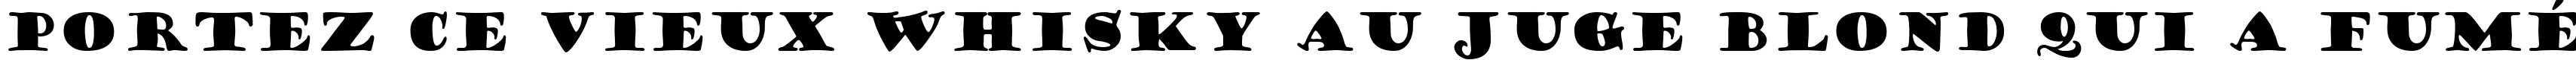 Пример написания шрифтом Goudy Stout текста на французском